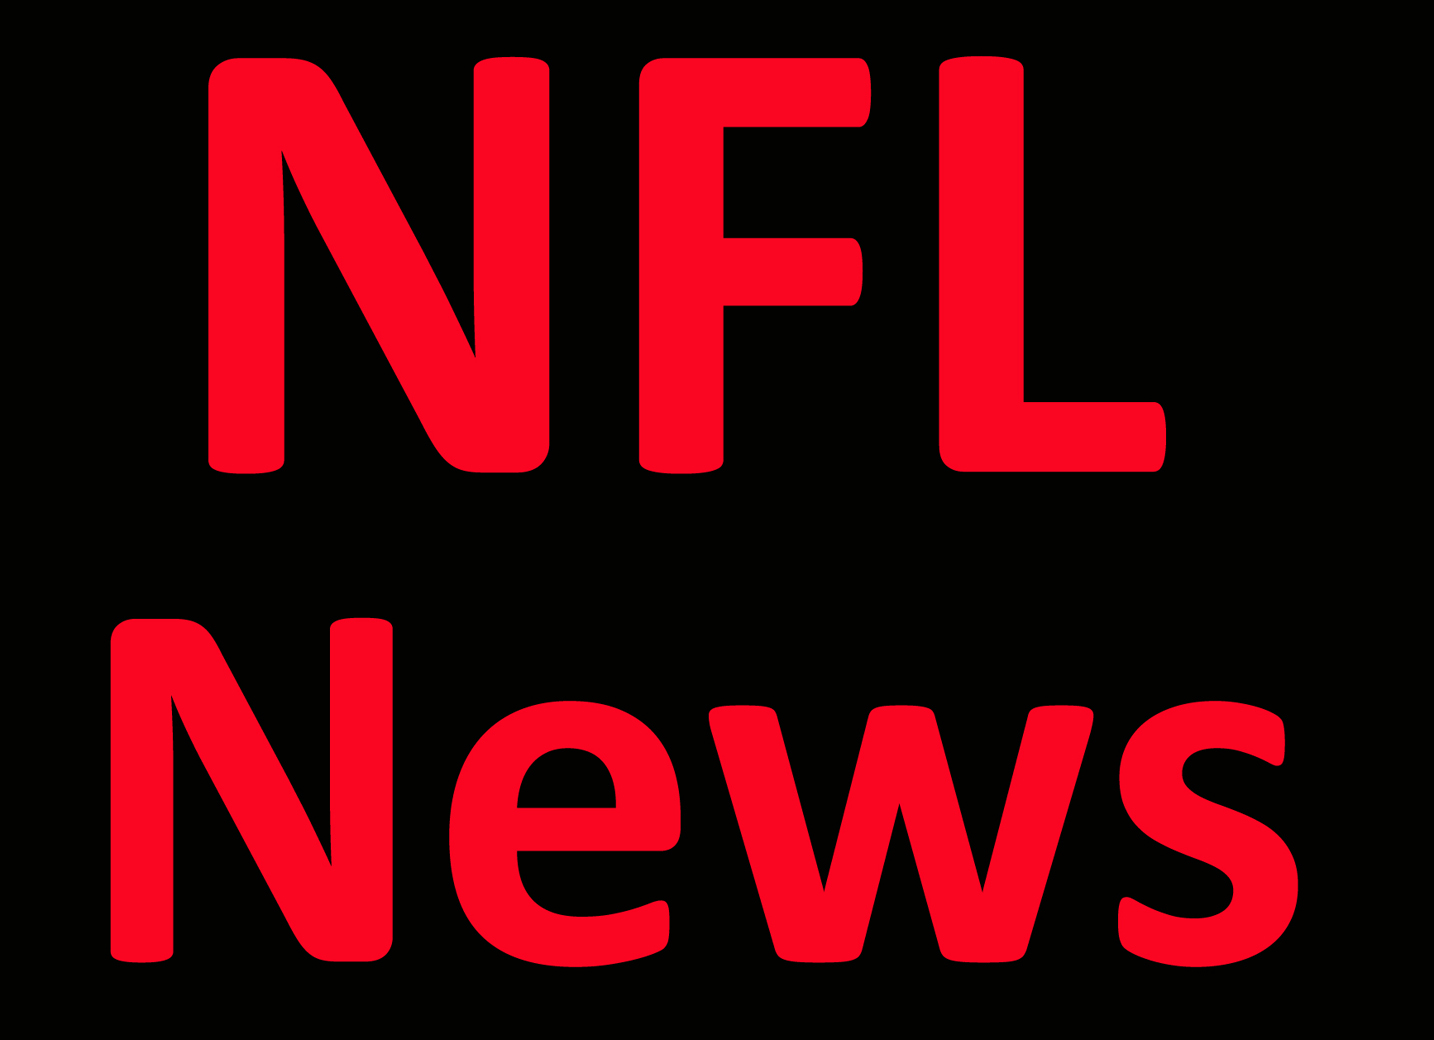 NFL News: Coach of the year? Look beyond ‘silly narrative’ around Matt LaFleur Per Report